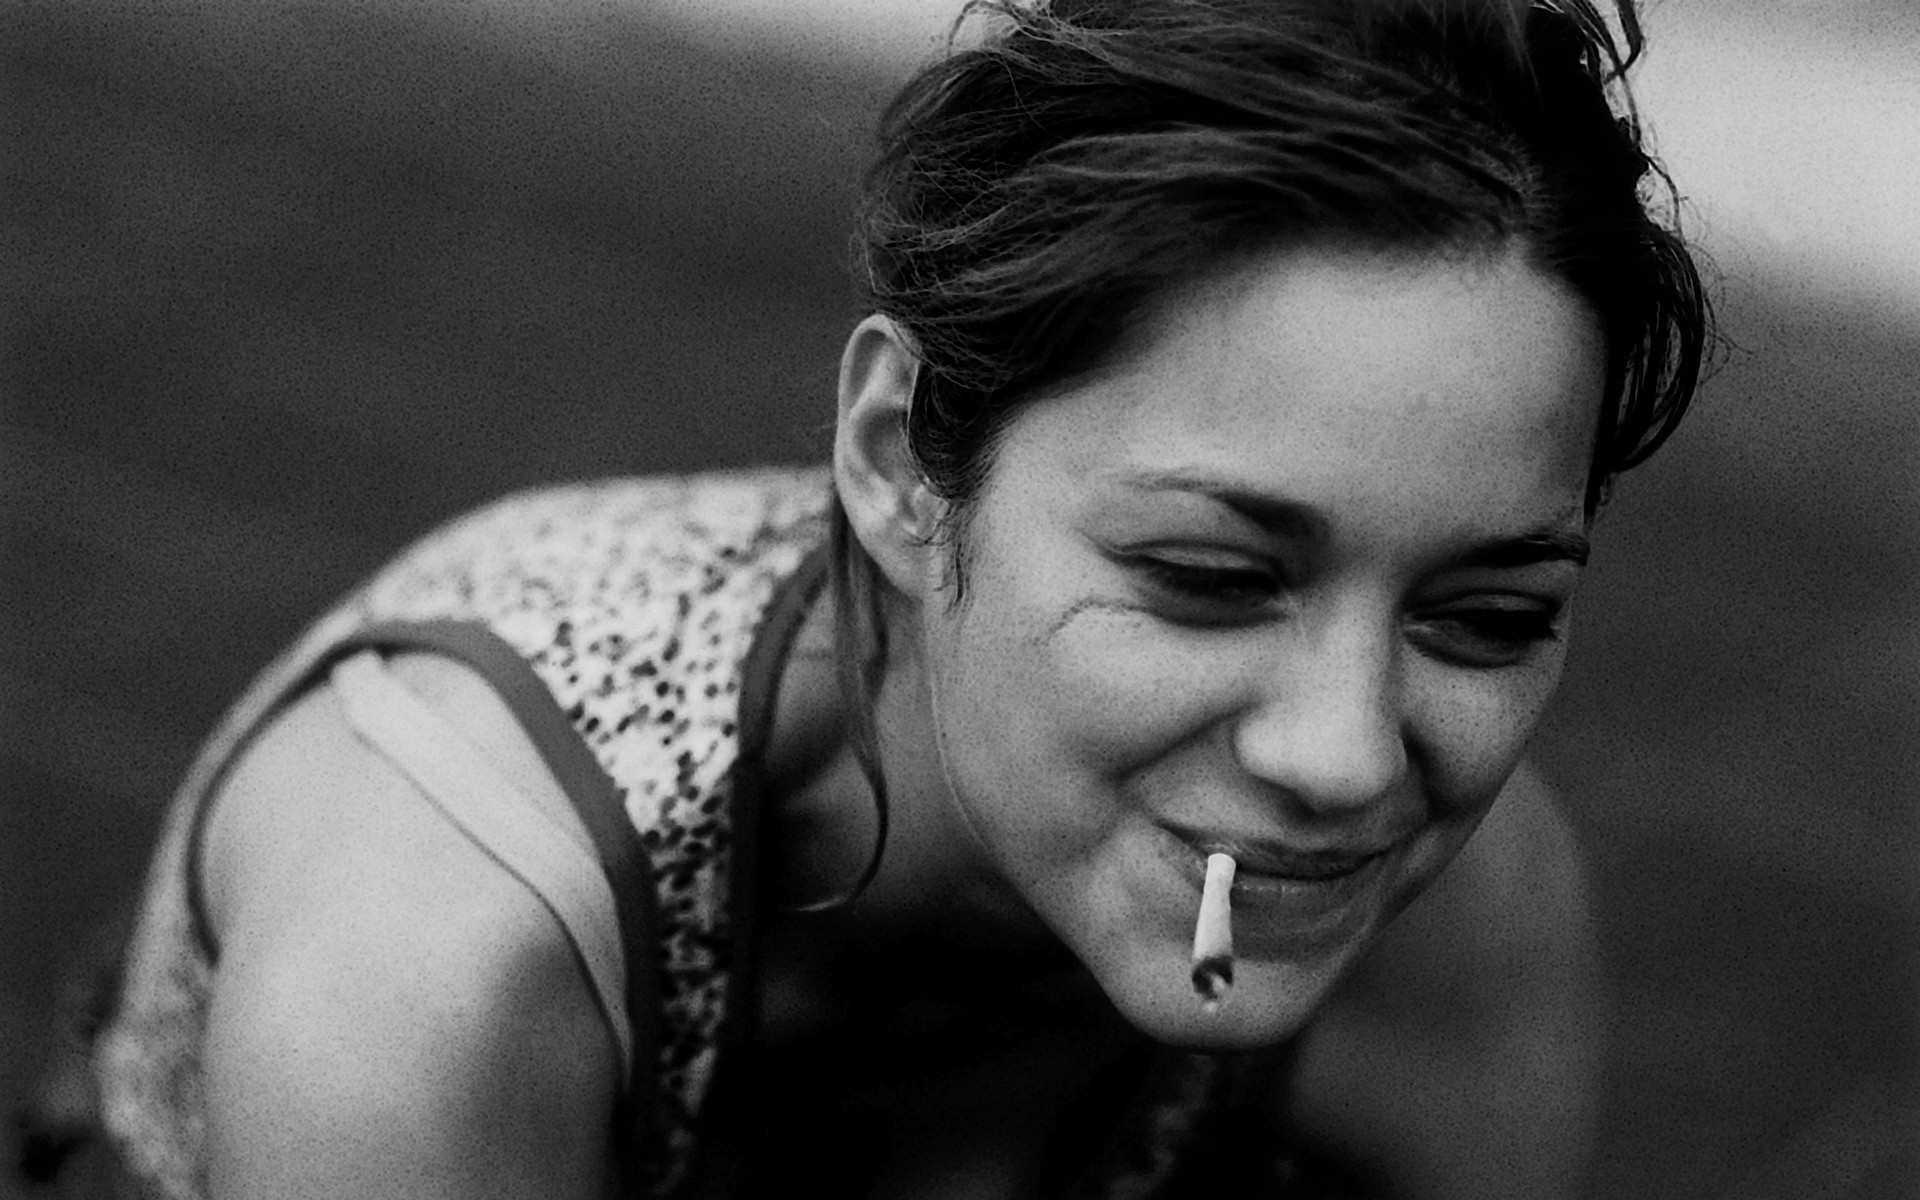 Marion Cotillard smoking a cigarette (or weed)
